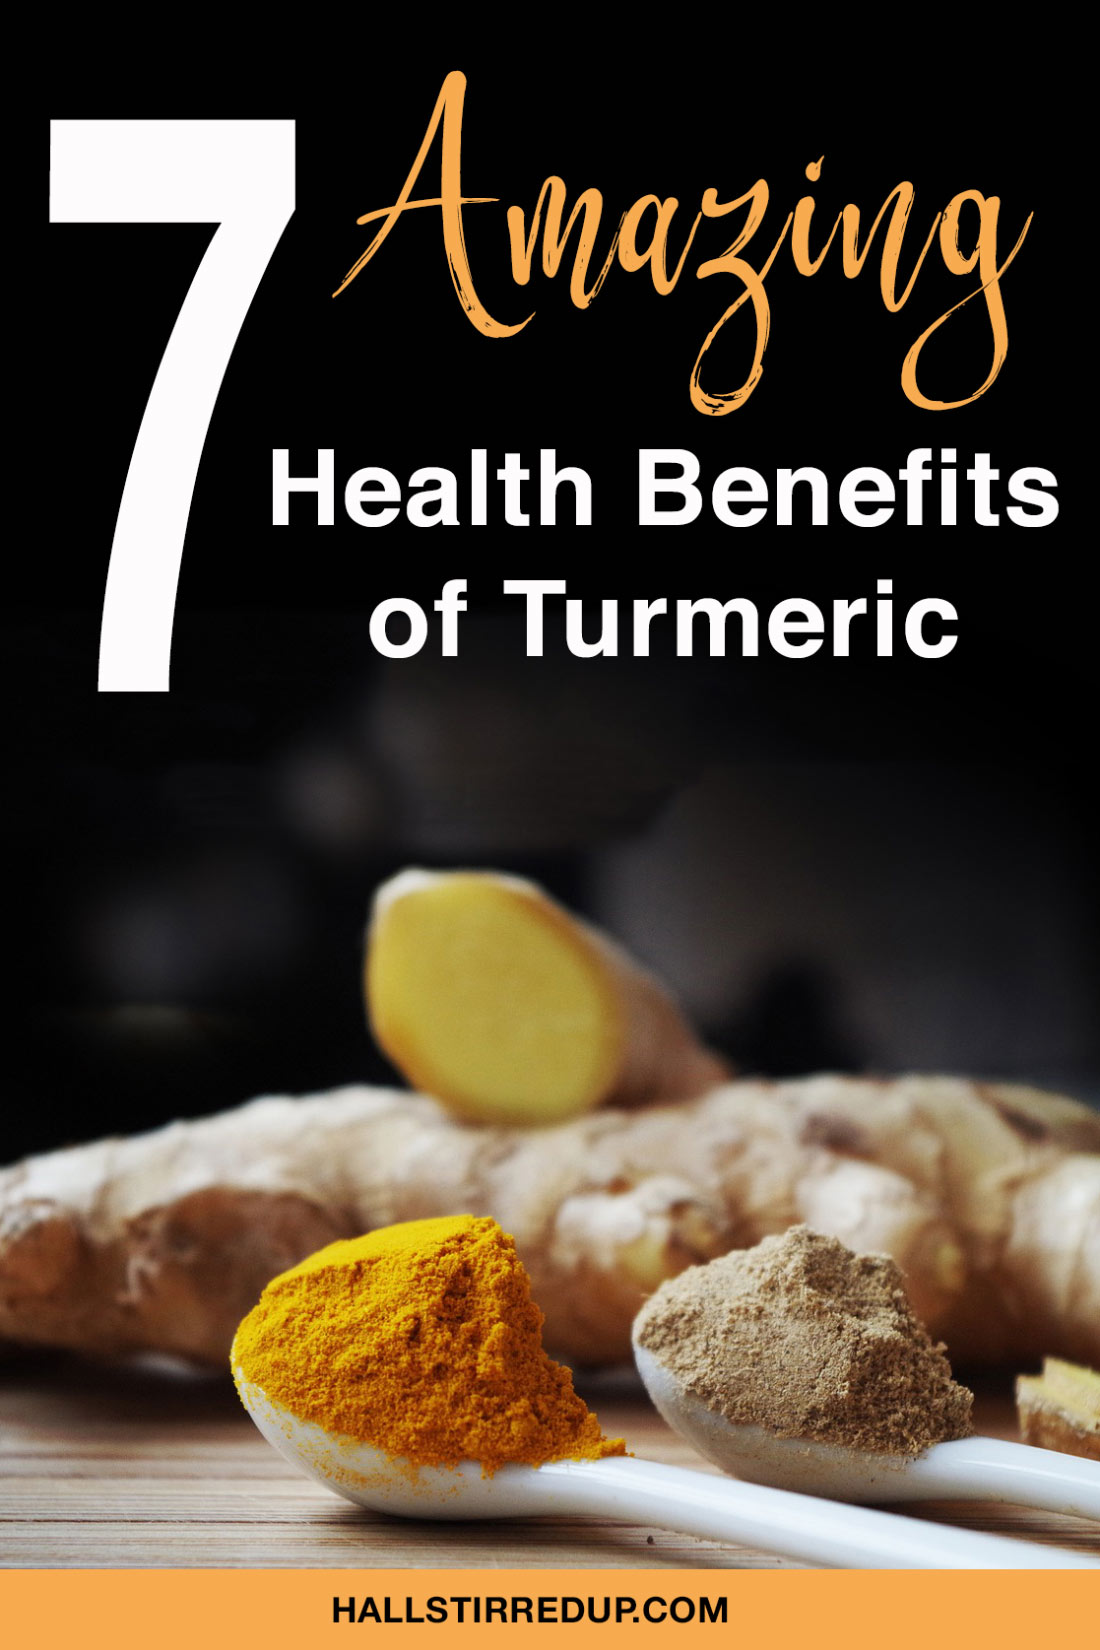 7 Amazing Health Benefits of Turmeric